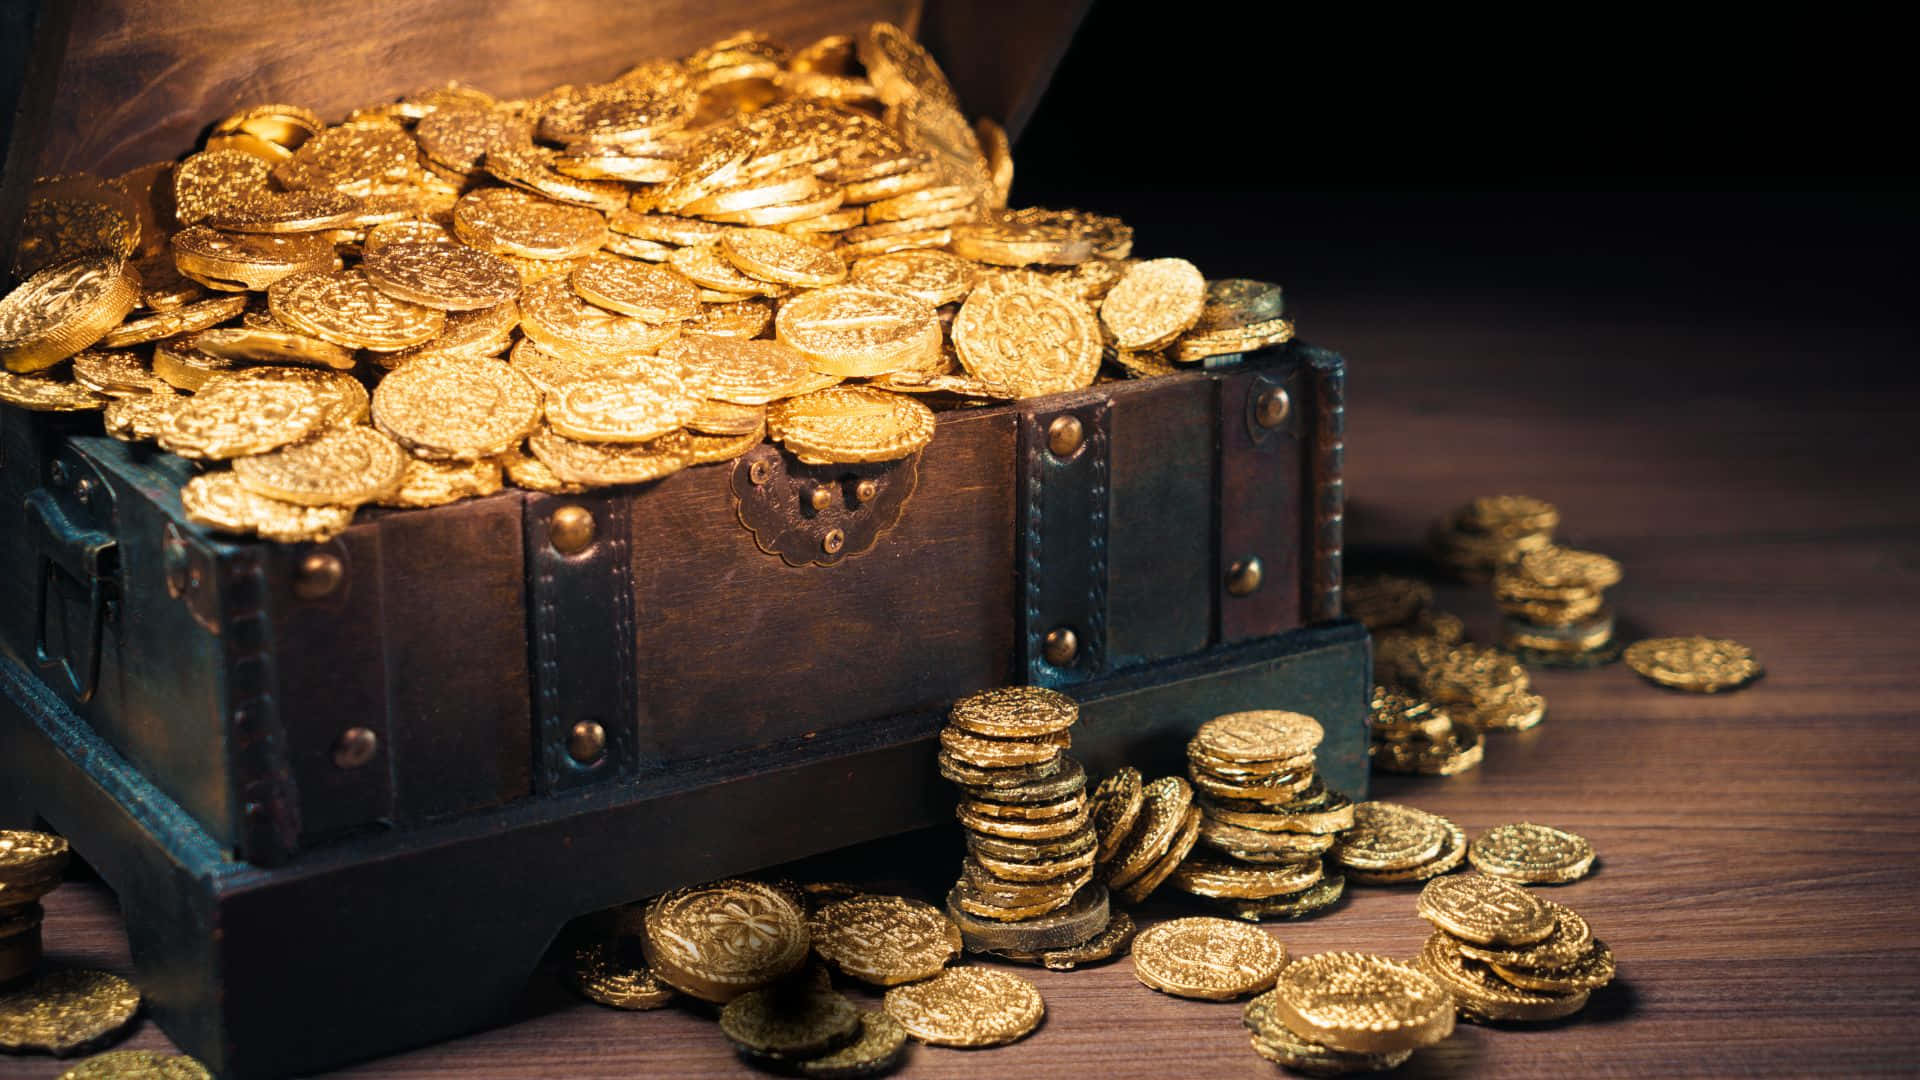 Treasure Chest Fullof Gold Coins Wallpaper